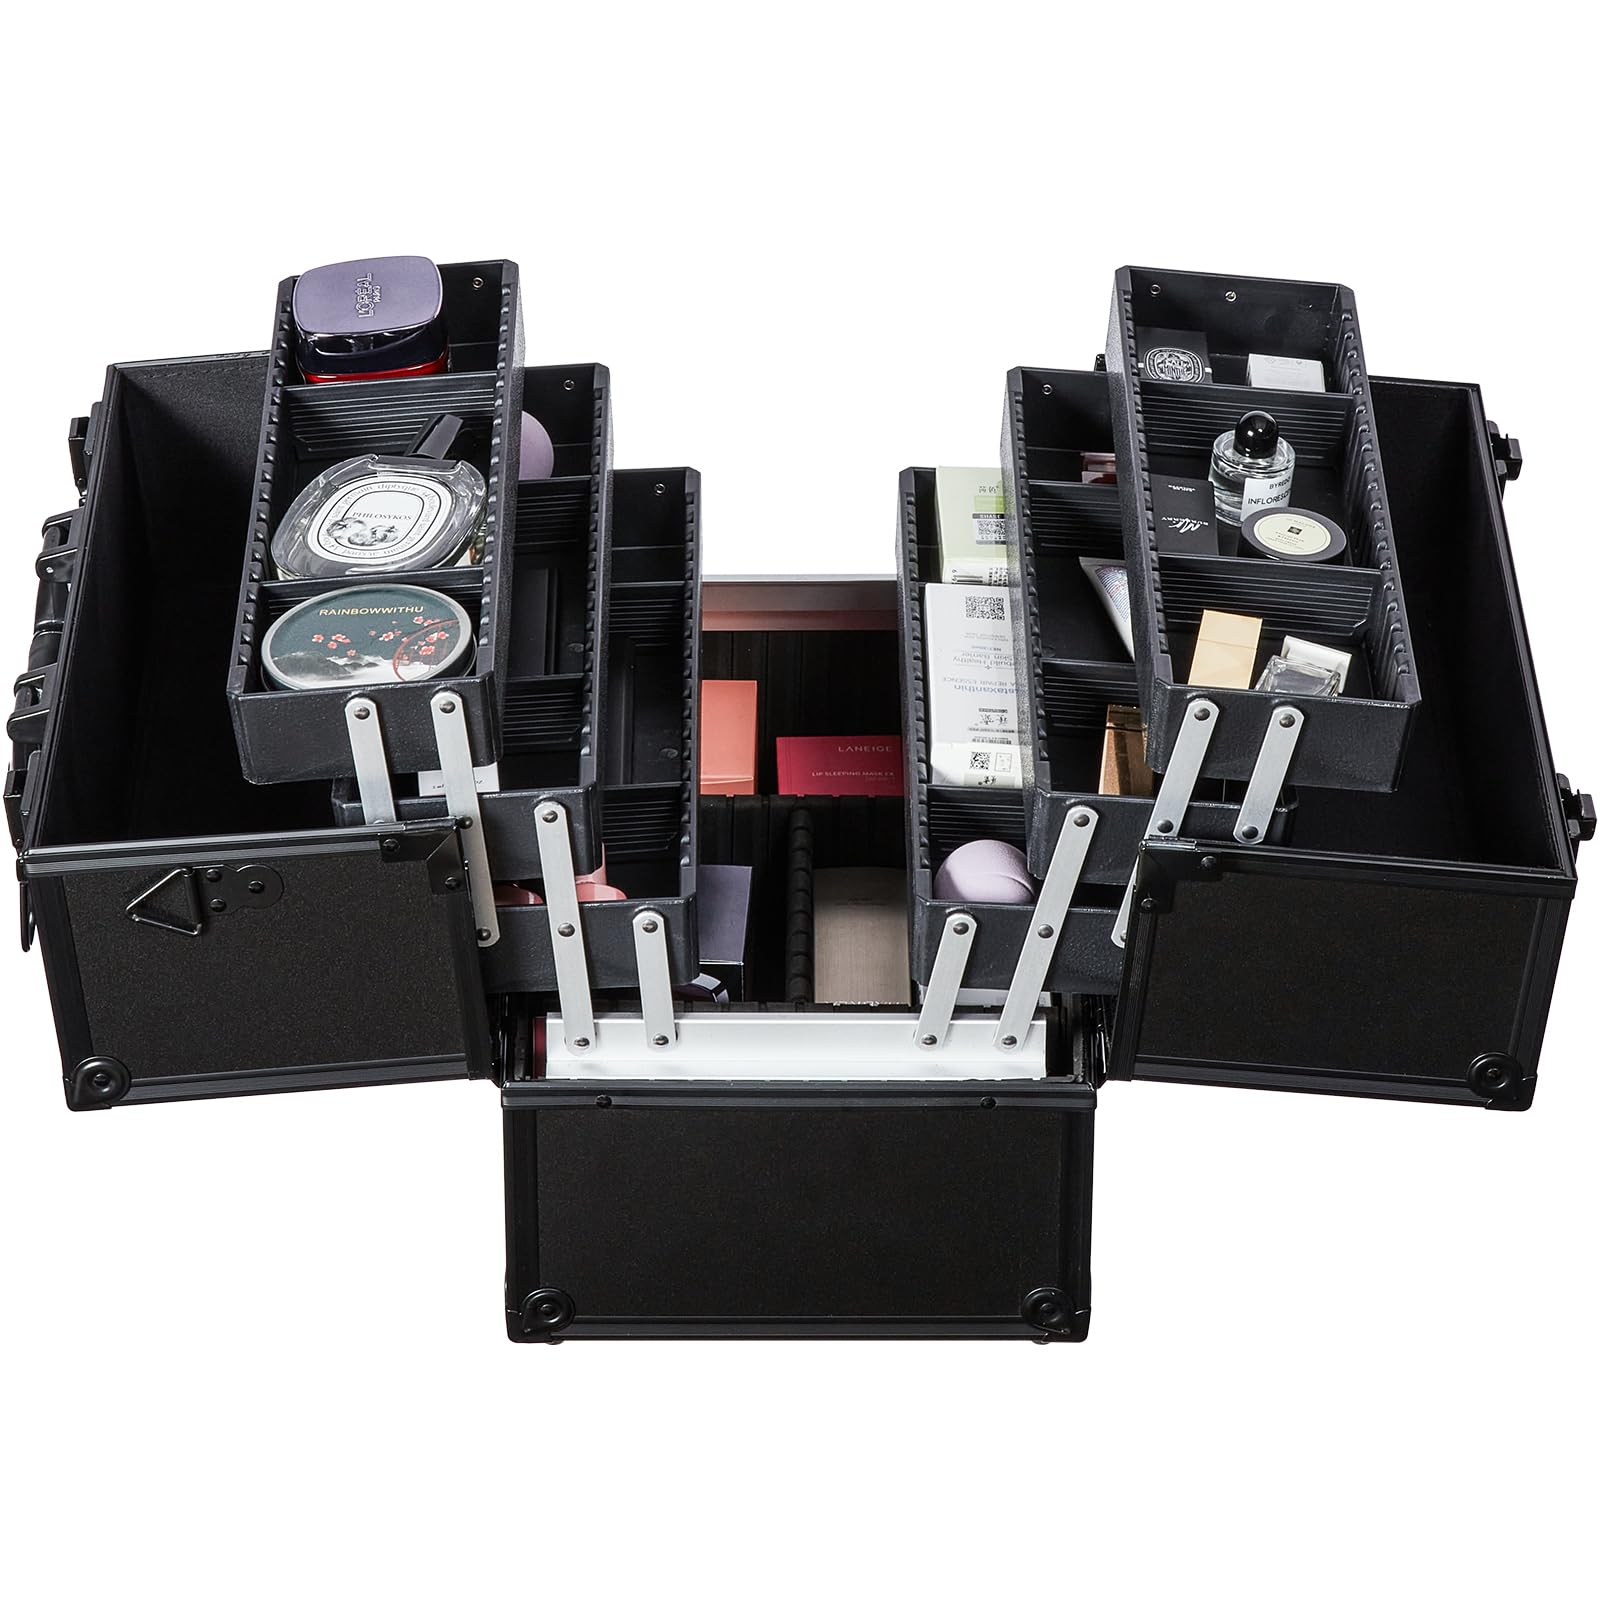 VEVOR Makeup Train Case Professional Makeup Storage Organizer Box Make Up Carrier for Women and Girls